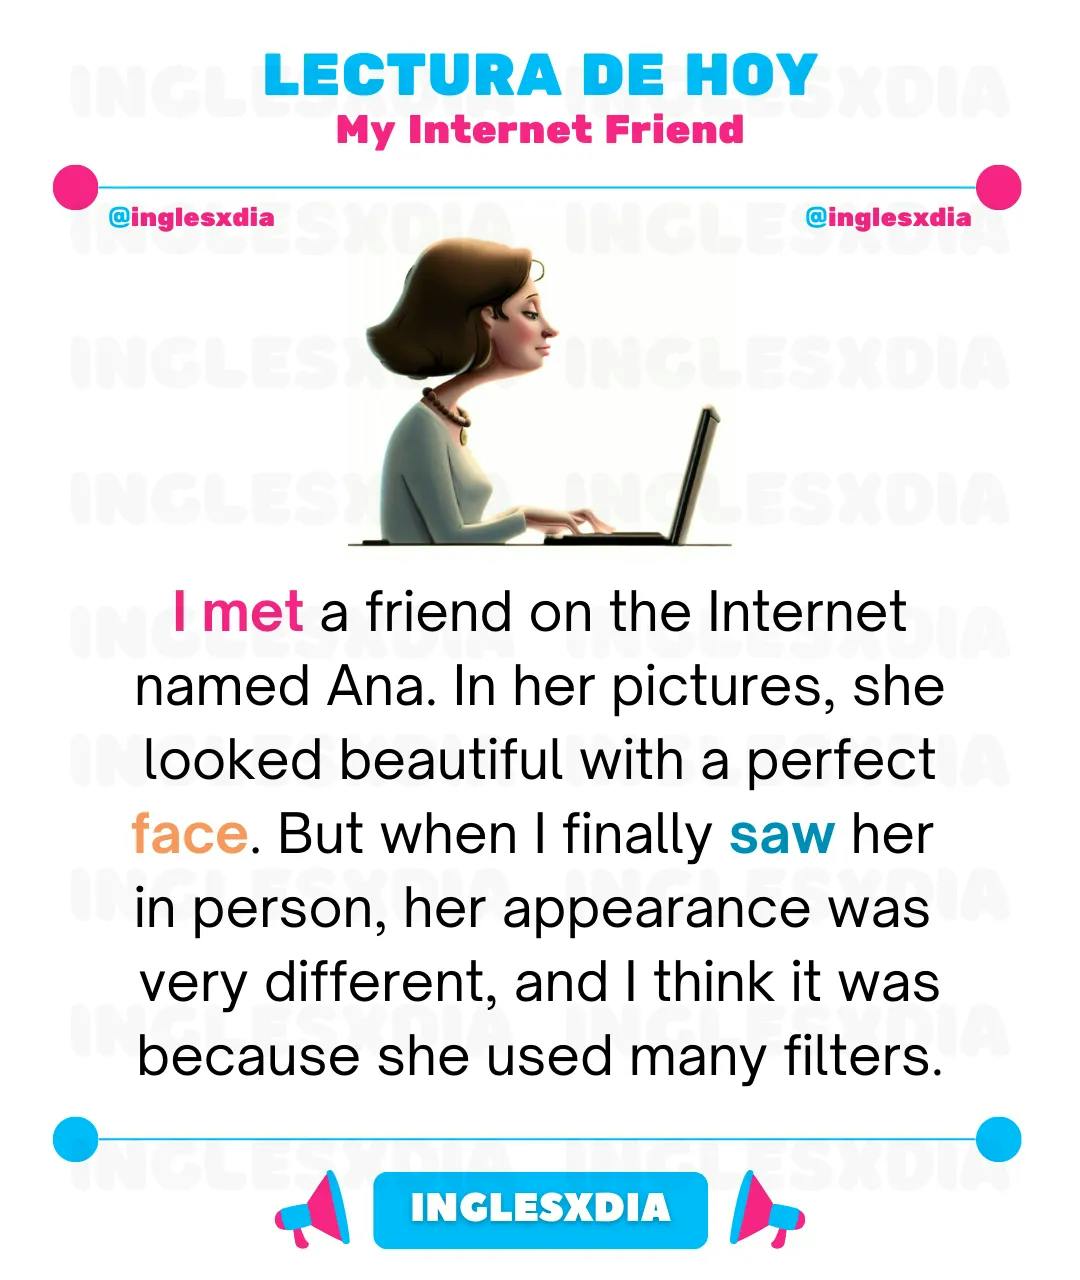 My Internet Friend